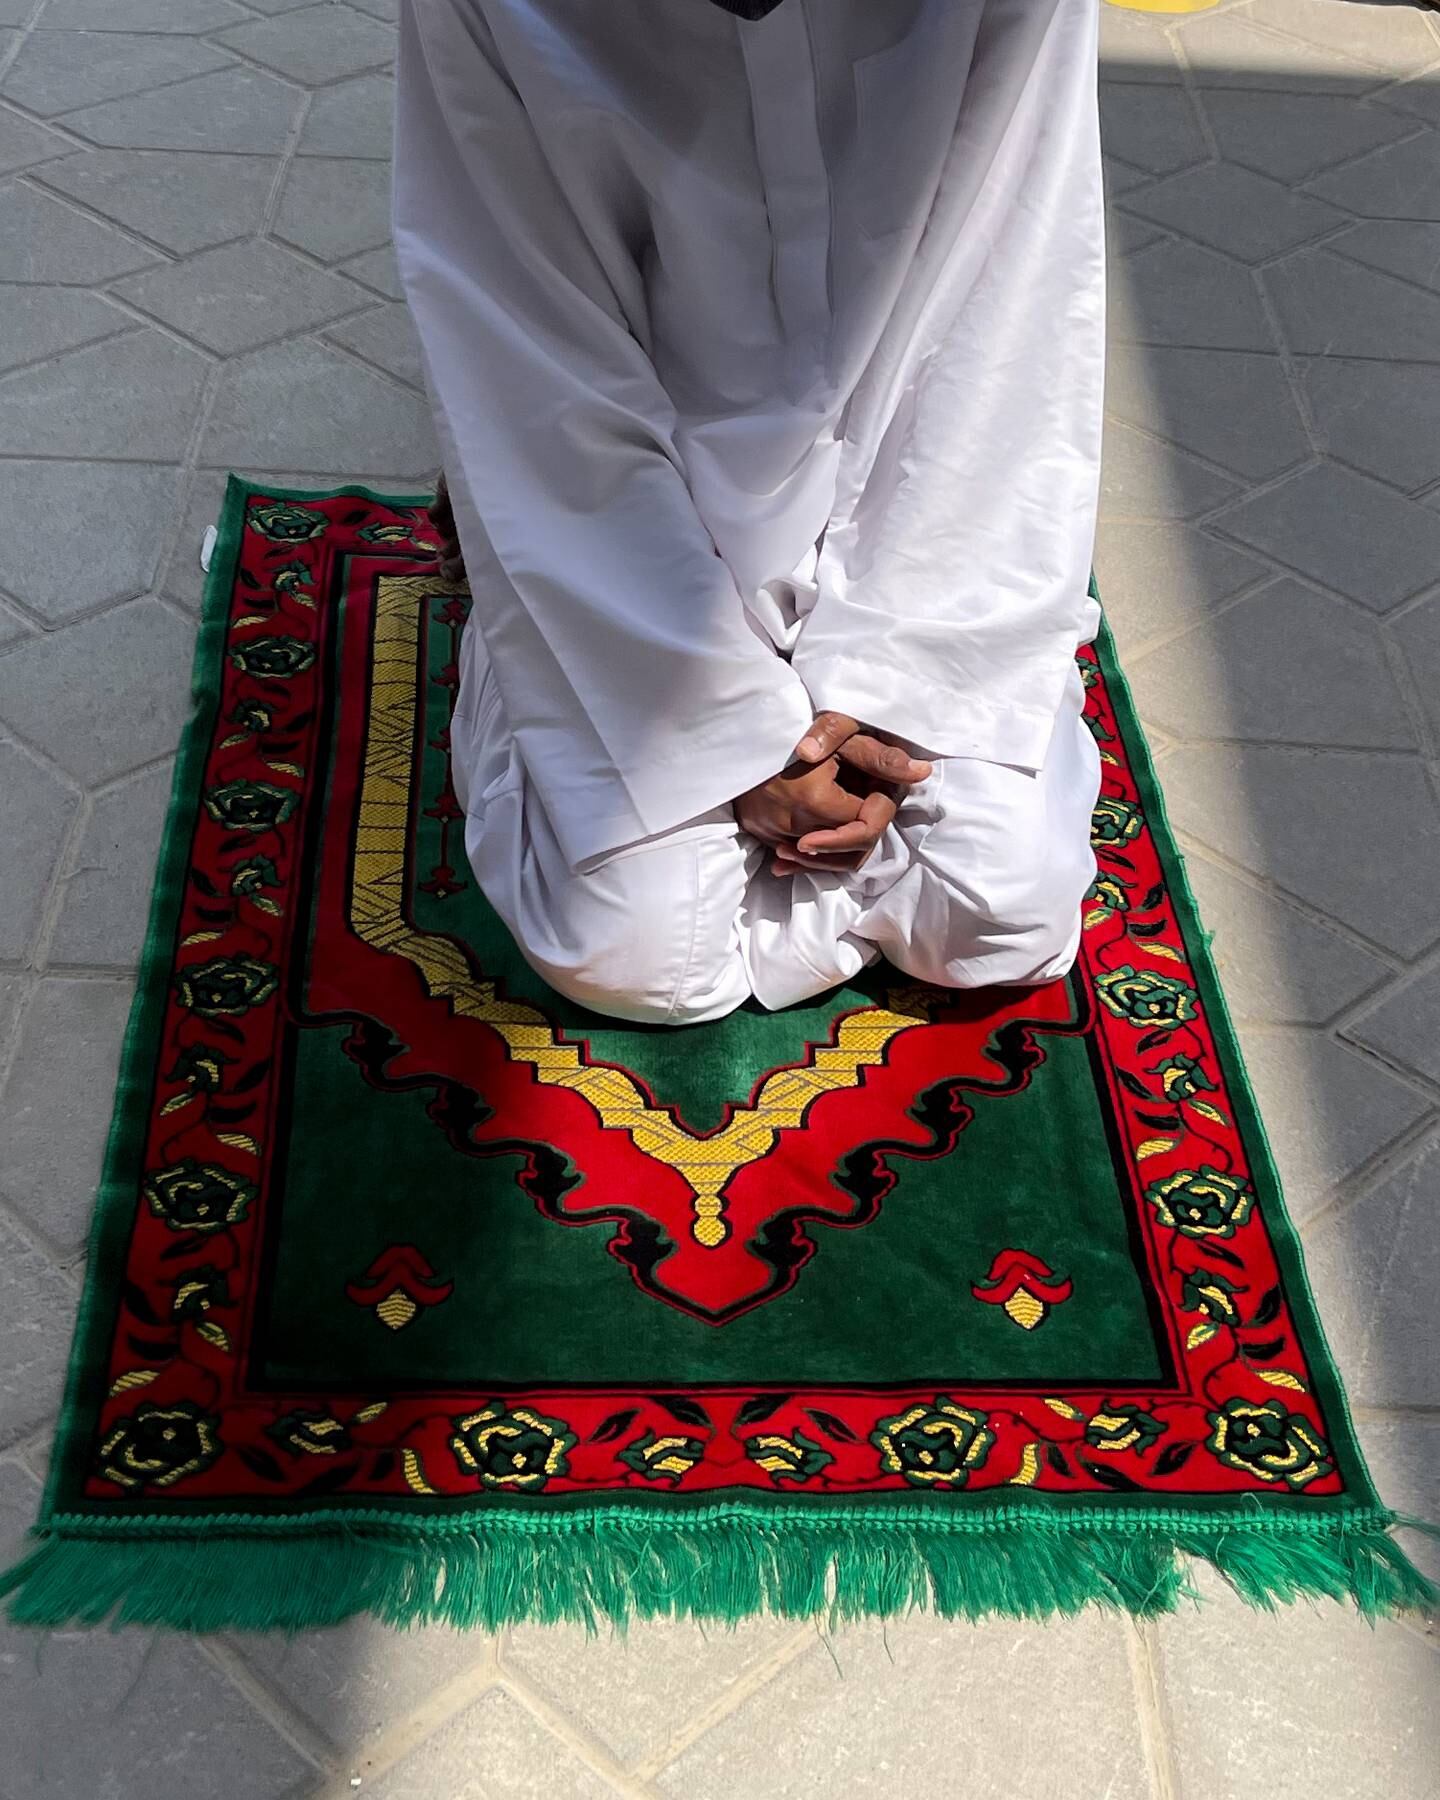 Documenting Friday prayers in Dubai has become a weekly hobby for Aqib Anwar. Photo: Aqib Anwar